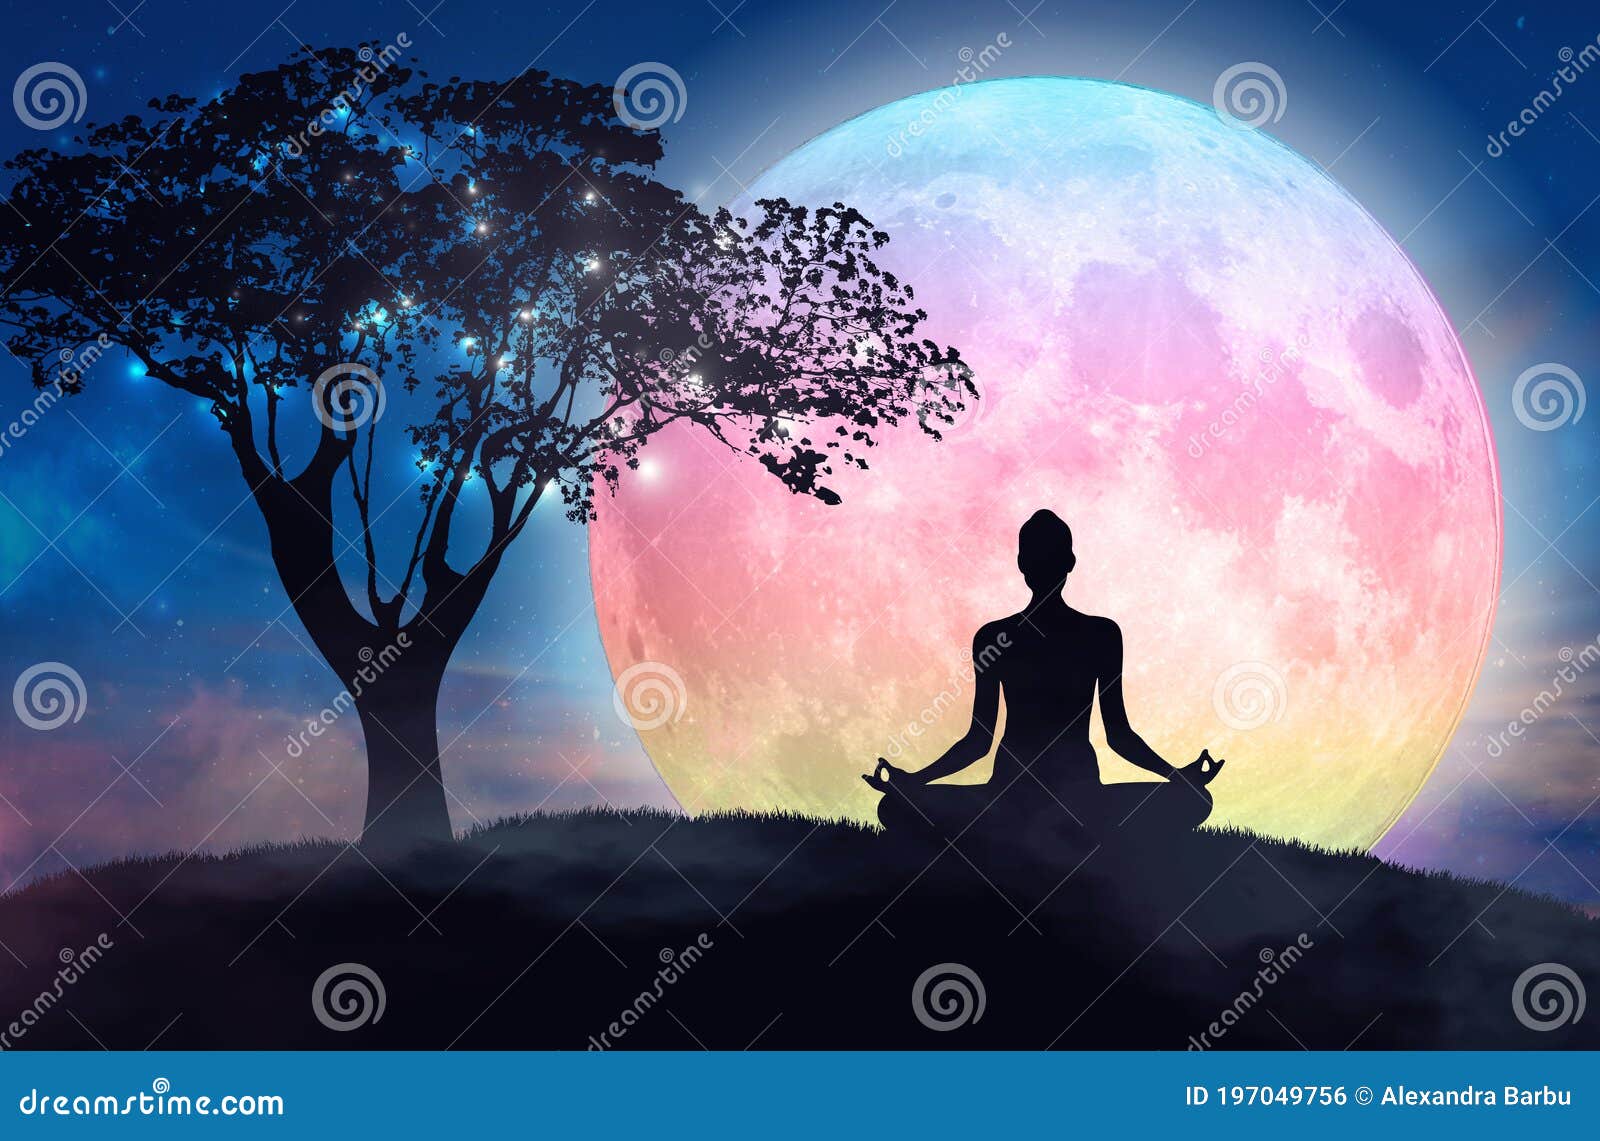 mountain girl silhouette, meditation under stars, full pink moon